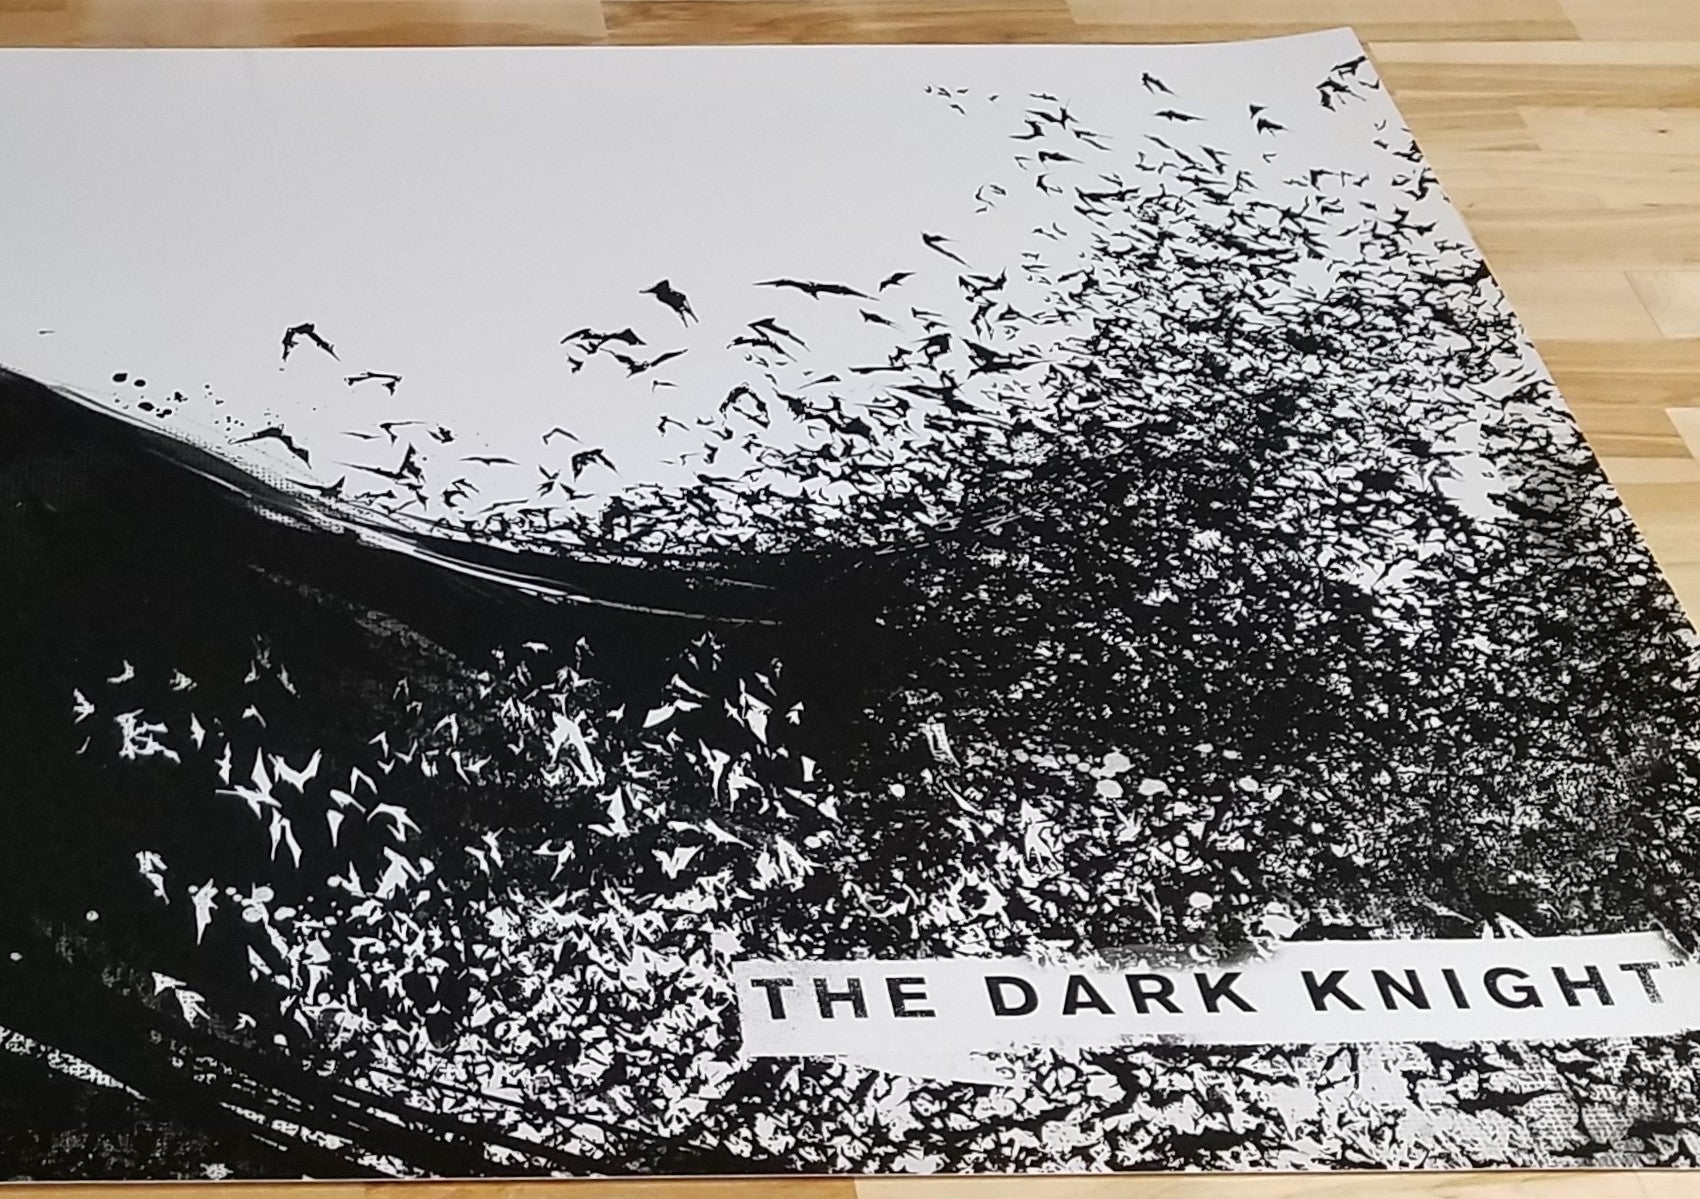 The Dark Knight Screen Print - 2016